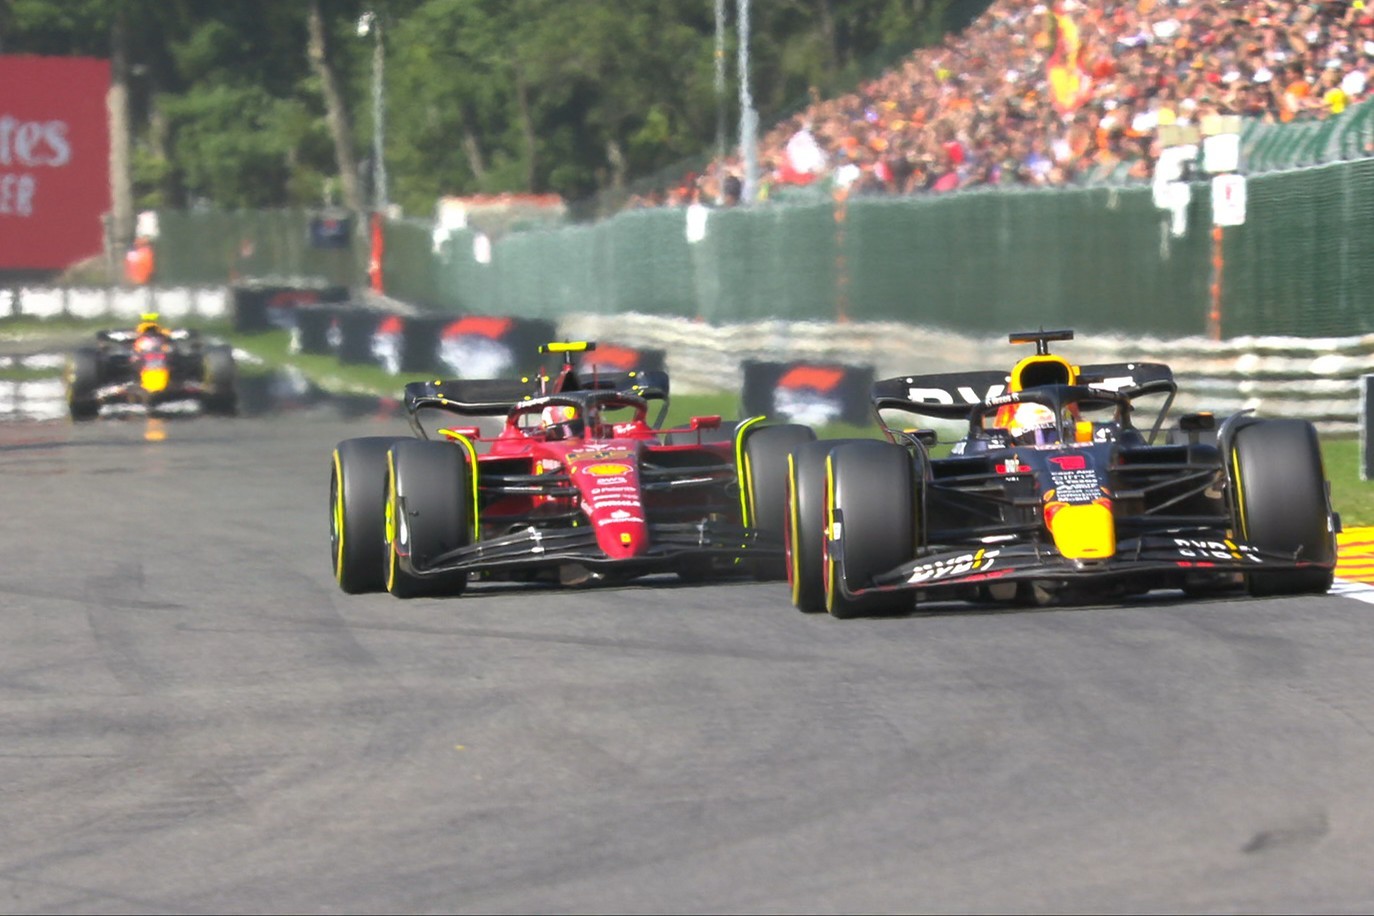 Verstappen tome el liderato de la carrera en la vuelta 18 / F1.com